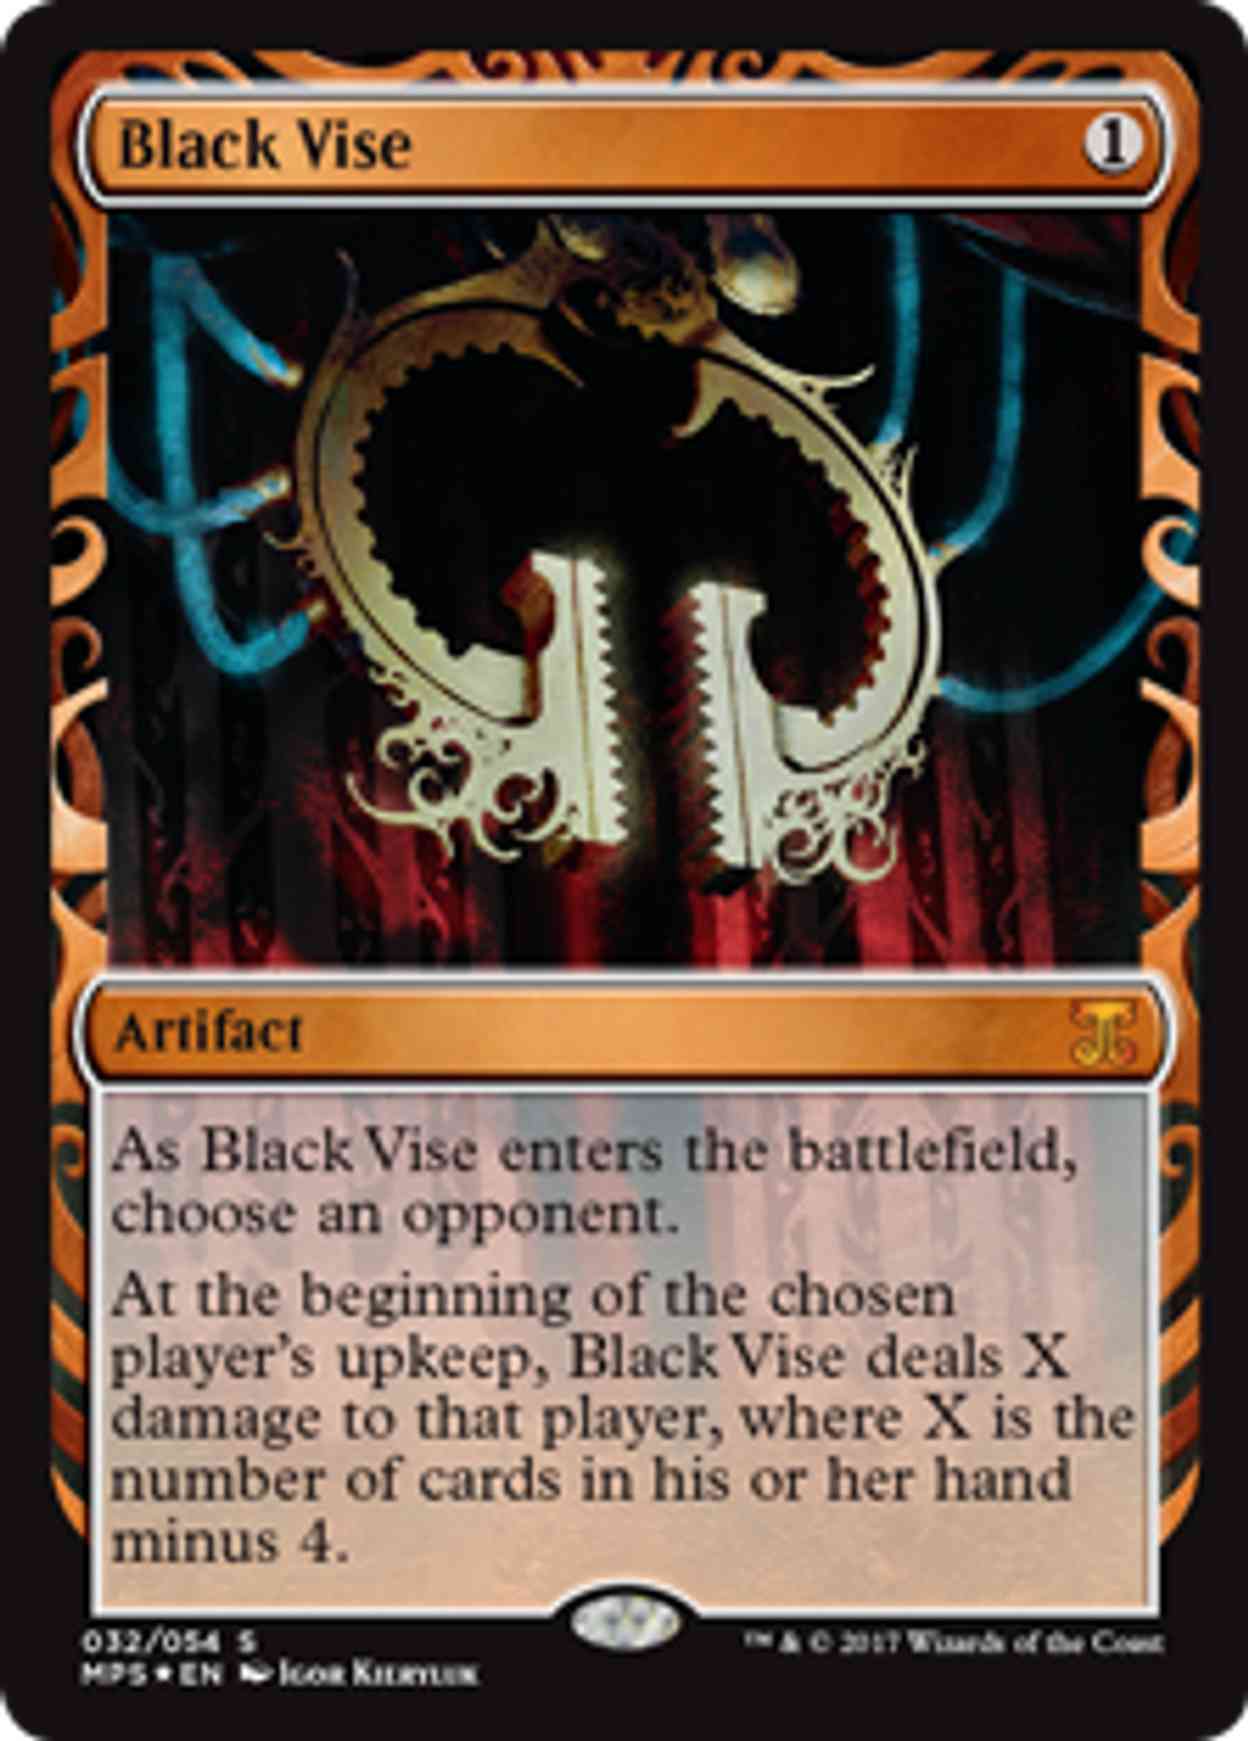 Black Vise magic card front